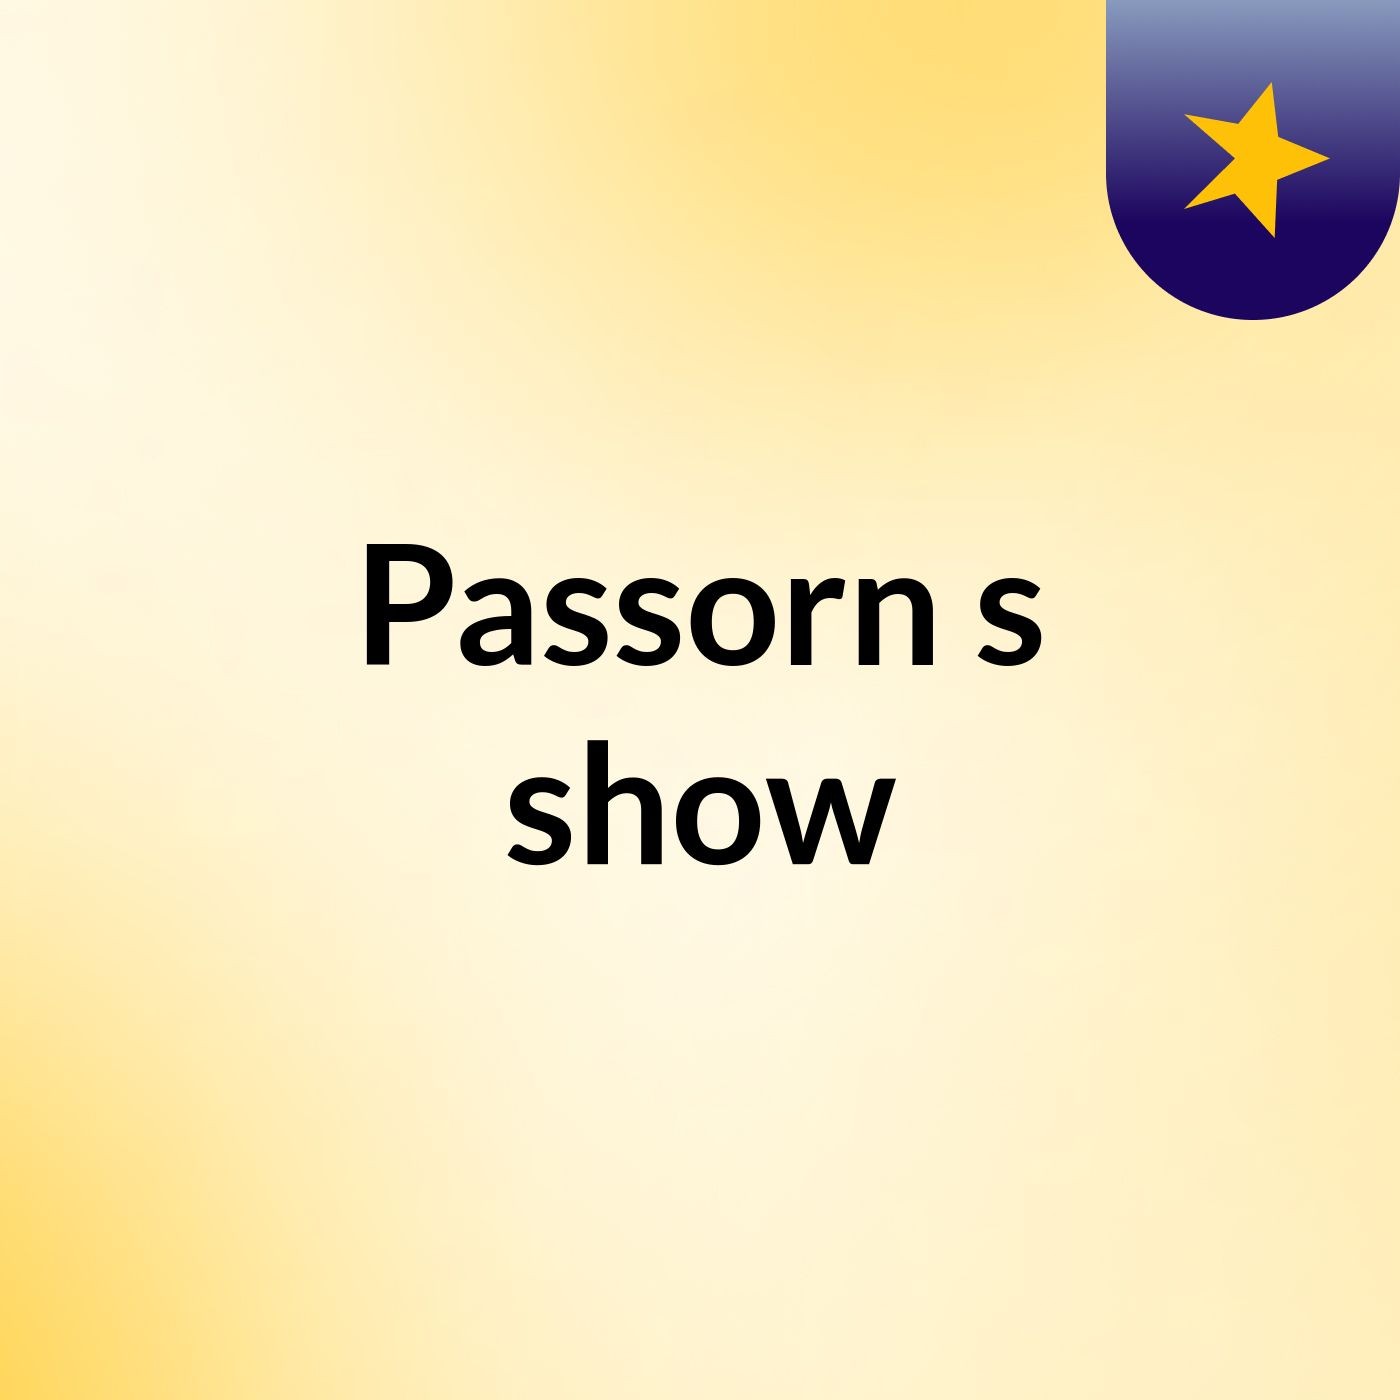 Passorn's show